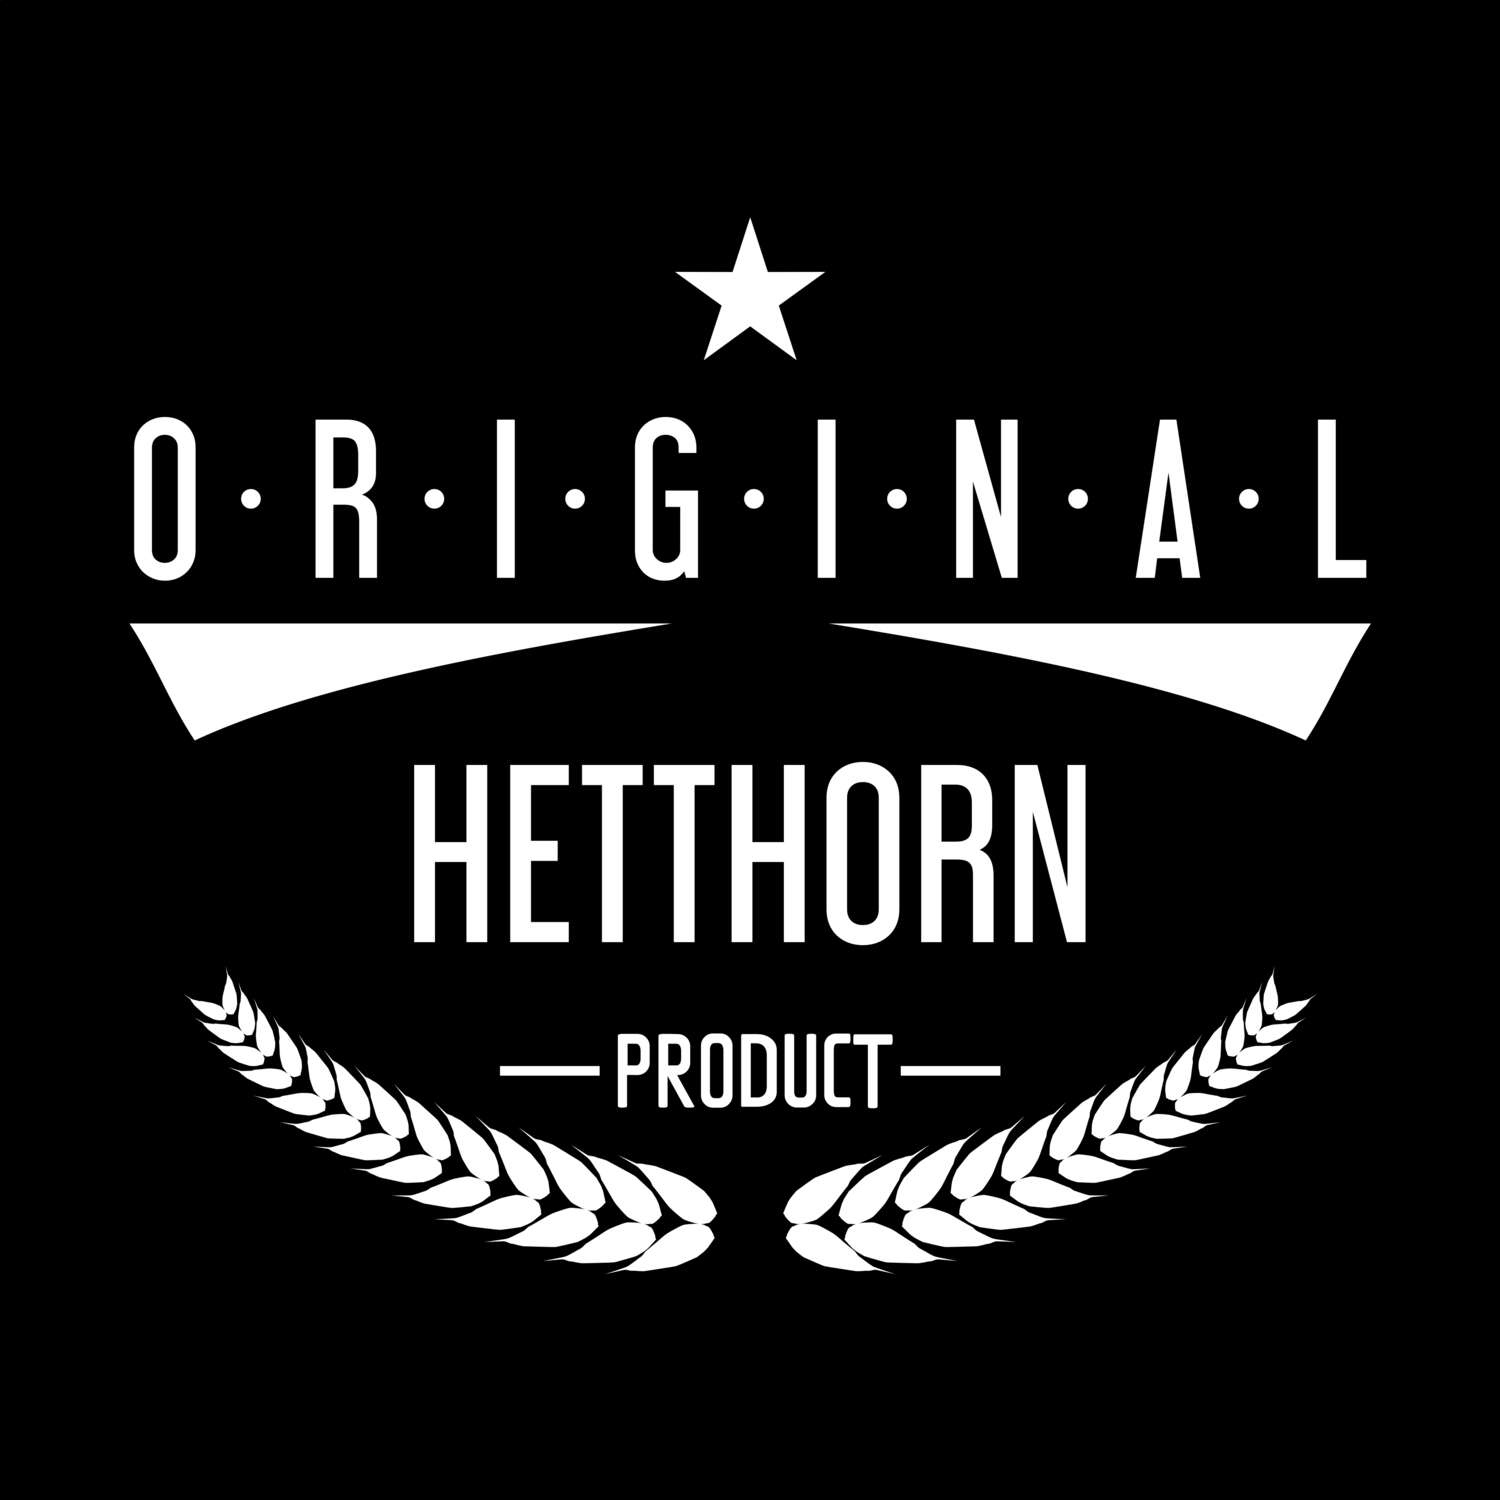 Hetthorn T-Shirt »Original Product«